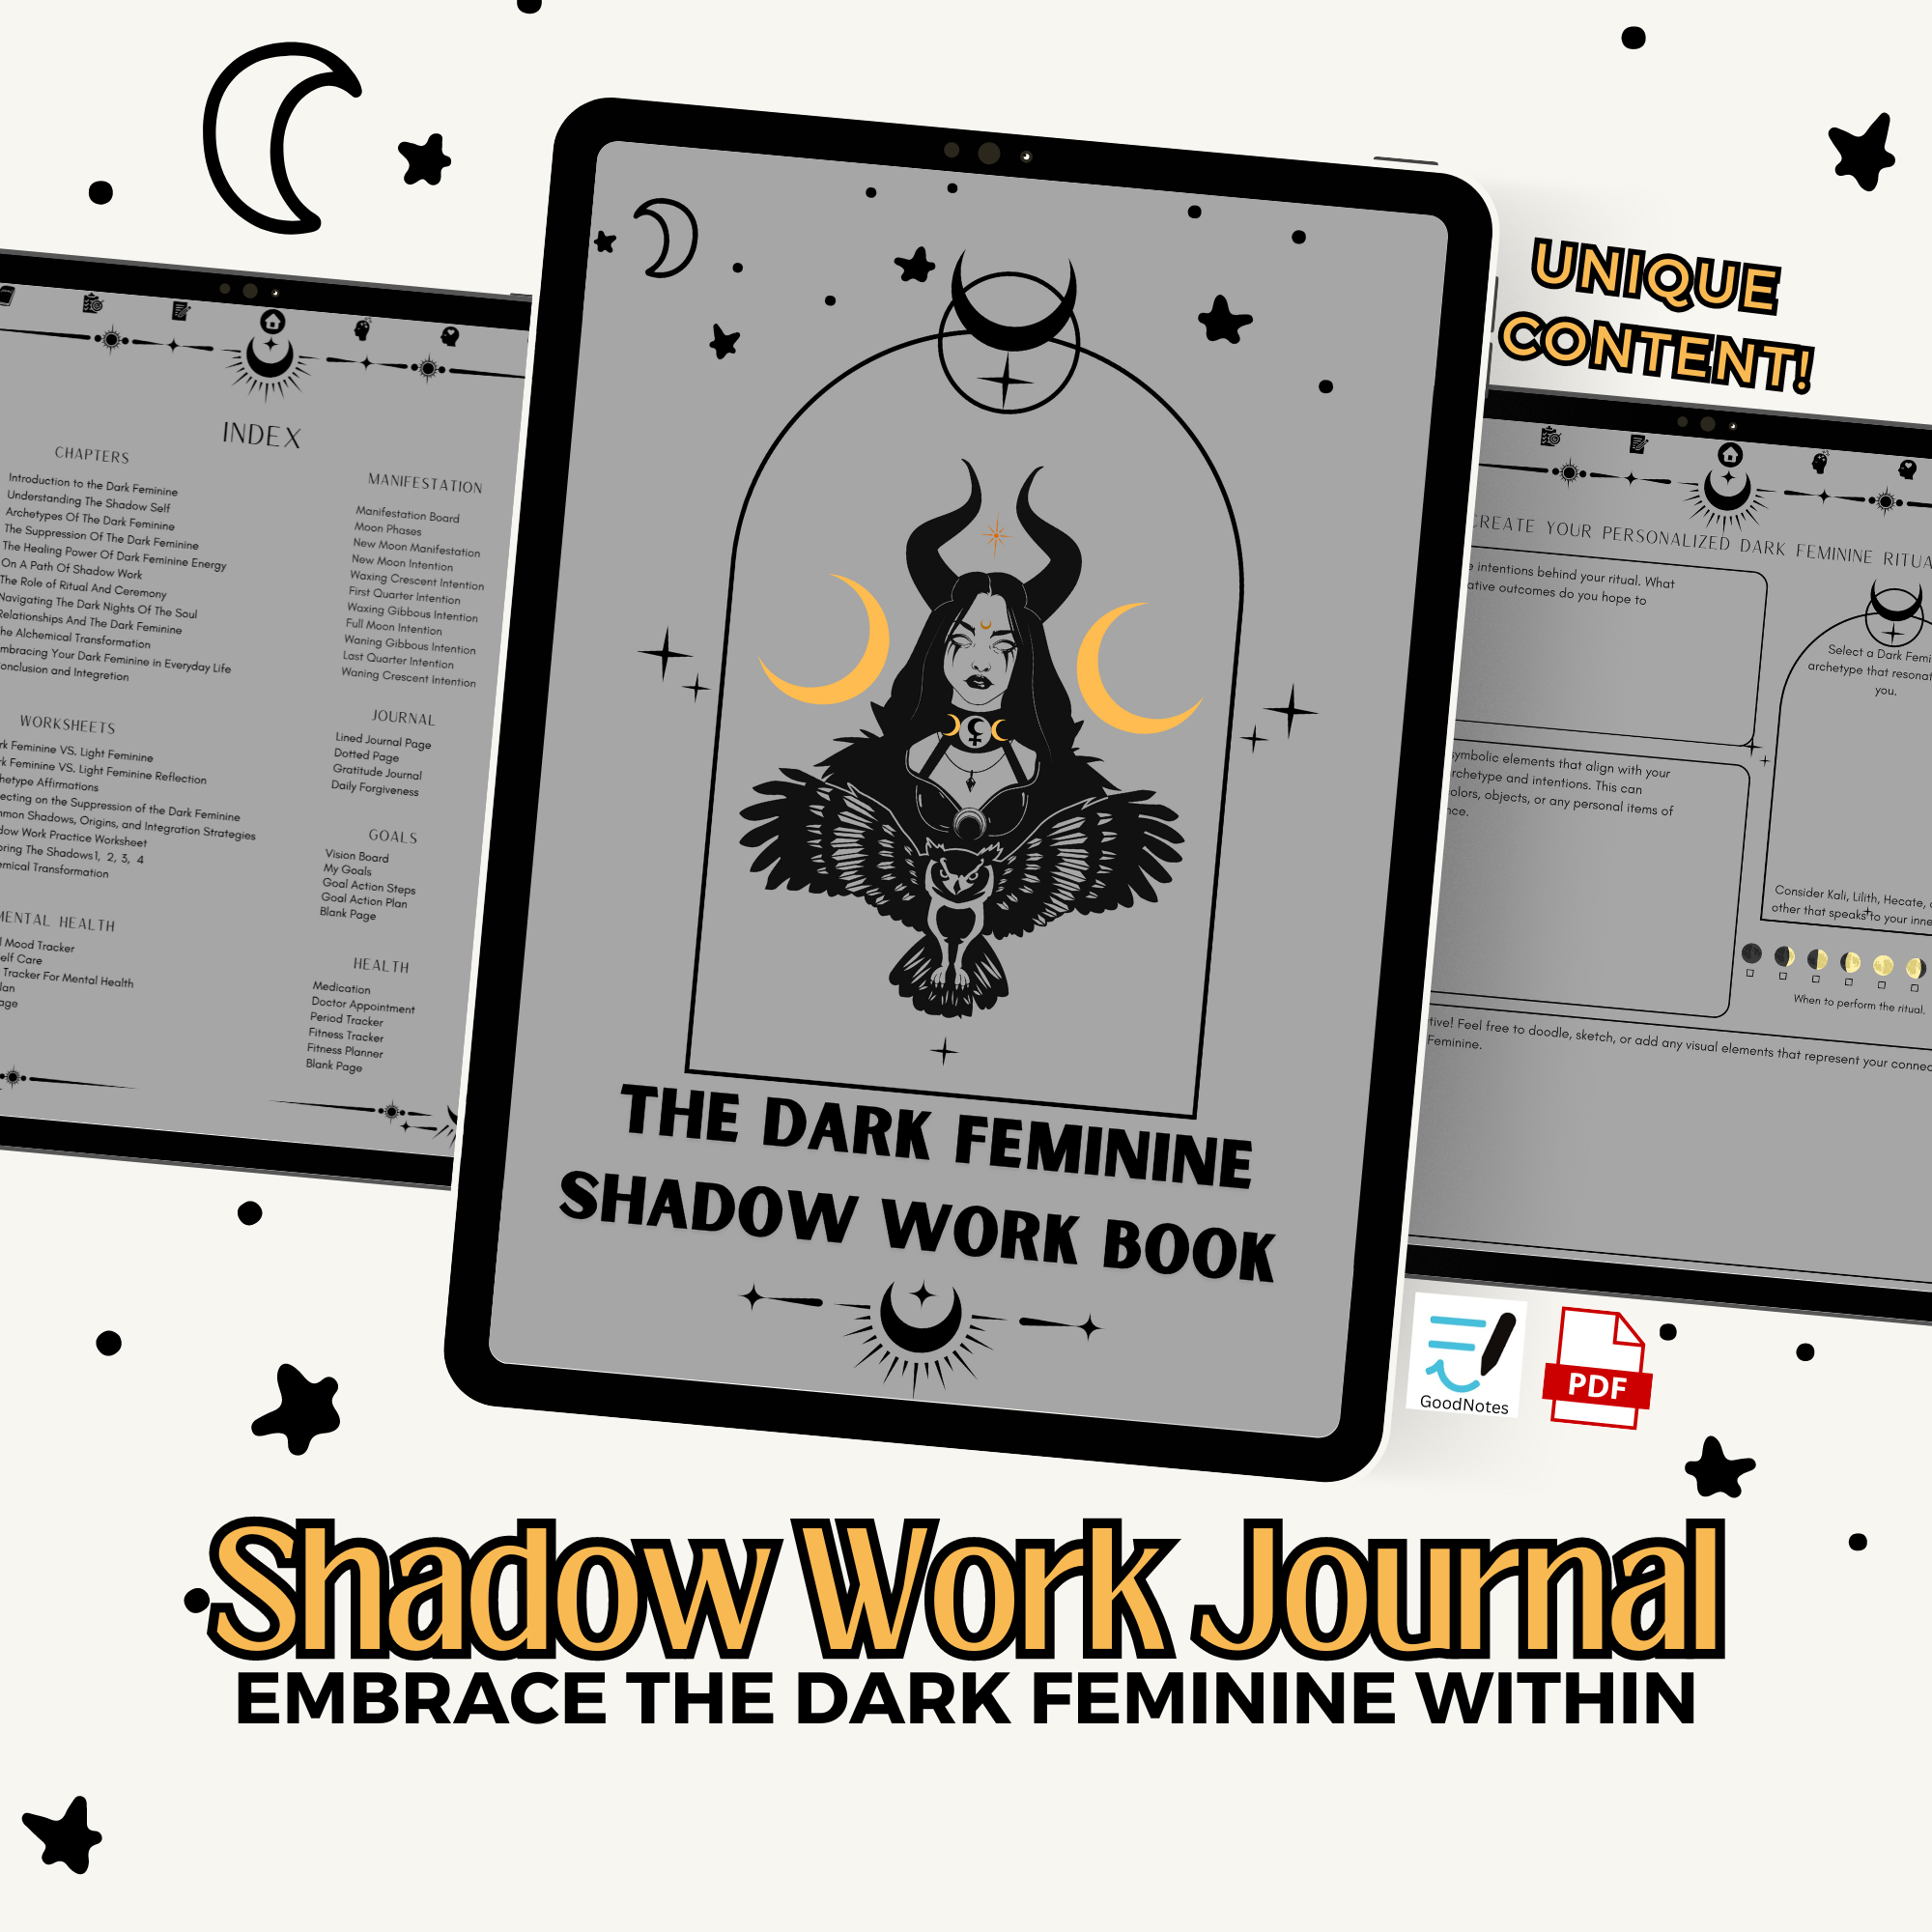 The Dark Feminine Shadow Workbook